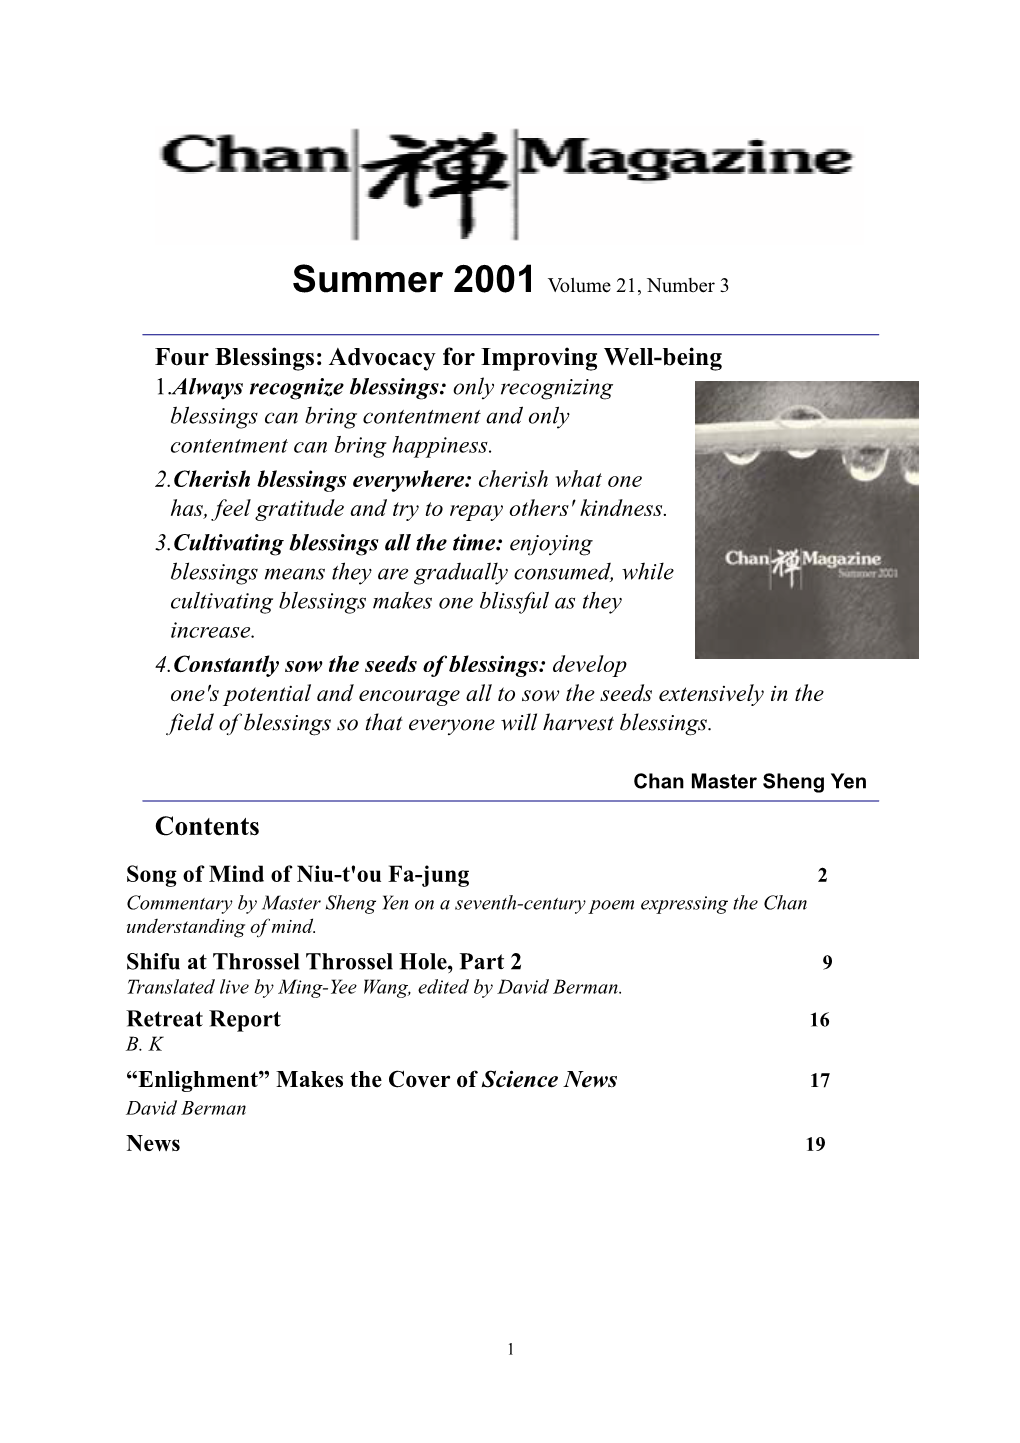 Chan Magazine Summer 2001 As